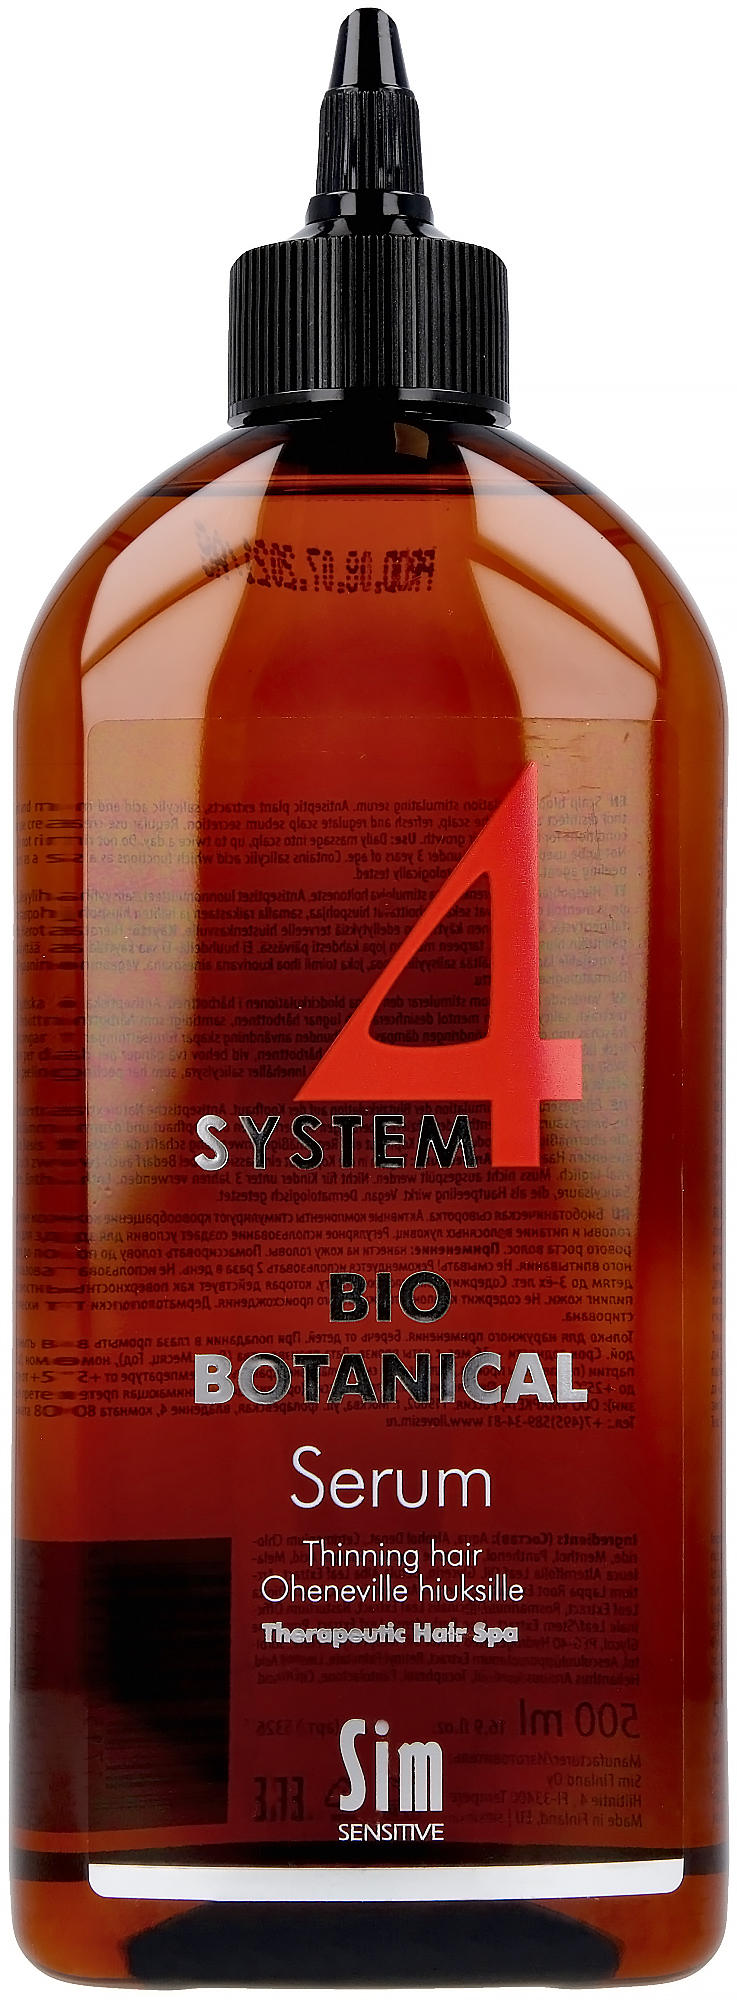 Sim Sensitive System 4 Bio Botanical Serum 500ml